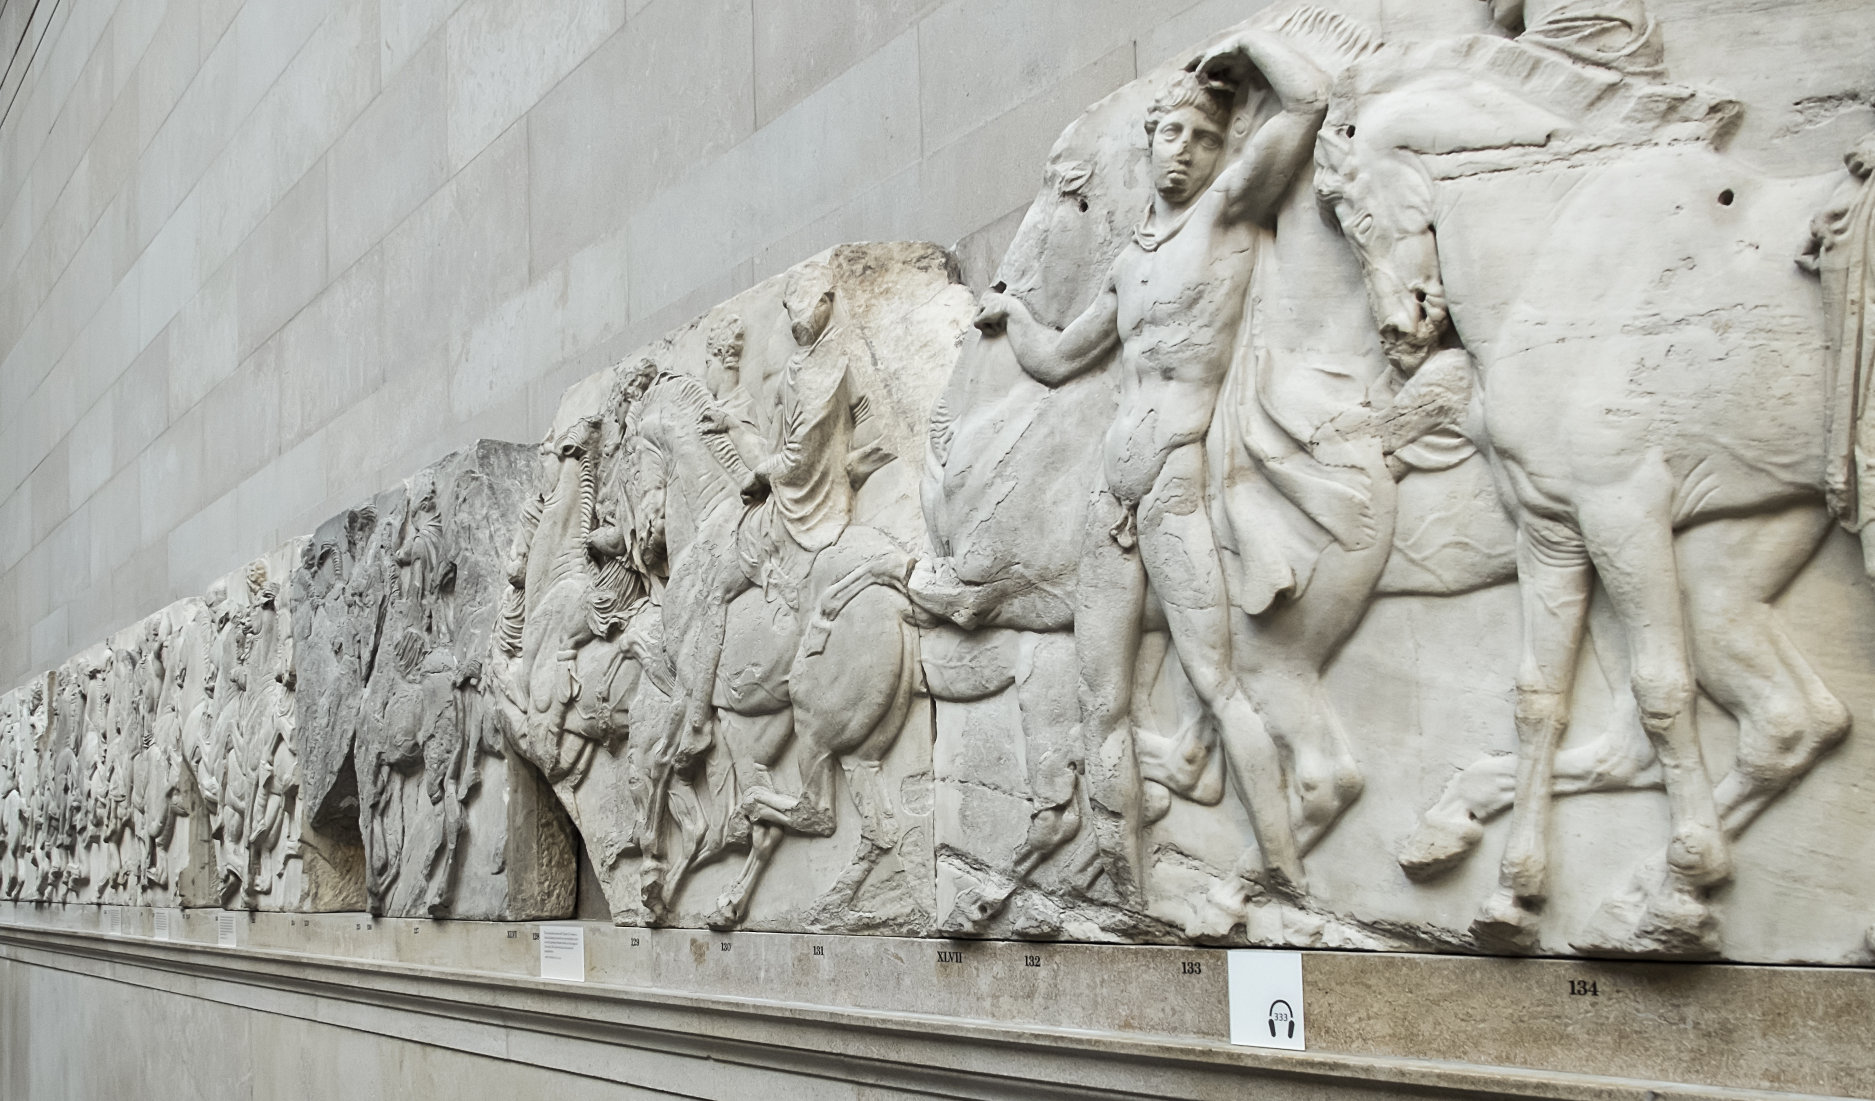 UNESCO: Ο Κυριάκος Μητσοτάκης ζήτησε επίσημα την επιστροφή των μαρμάρων από το Βρετανικό Μουσείο